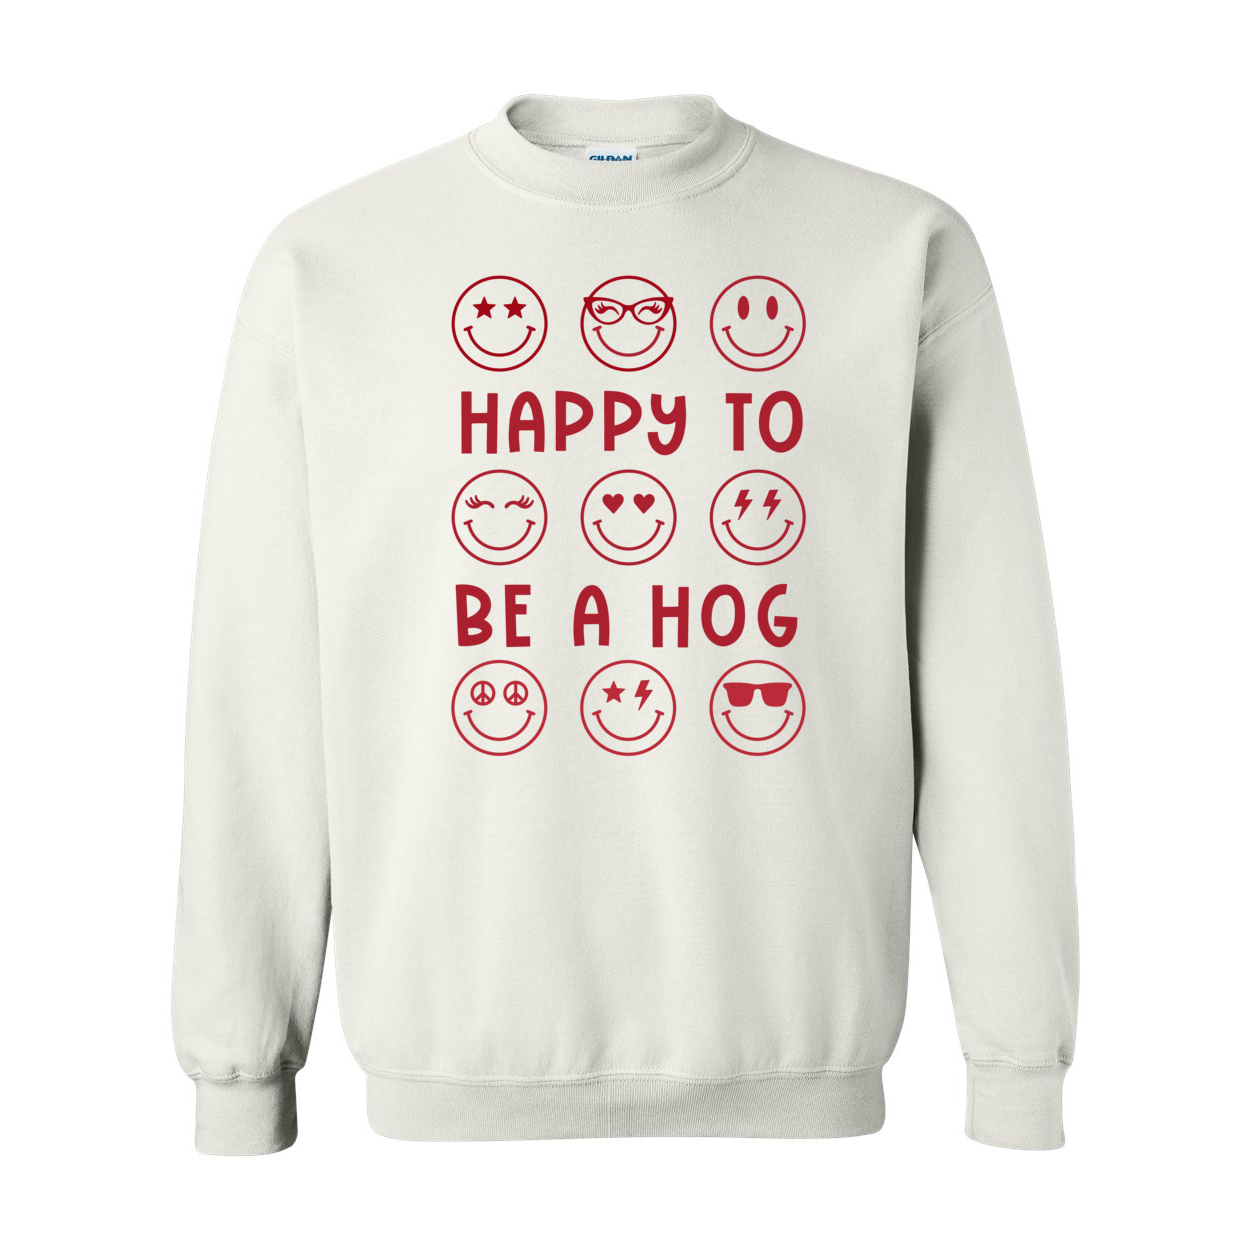 Happy Hog Crewneck Sweatshirt